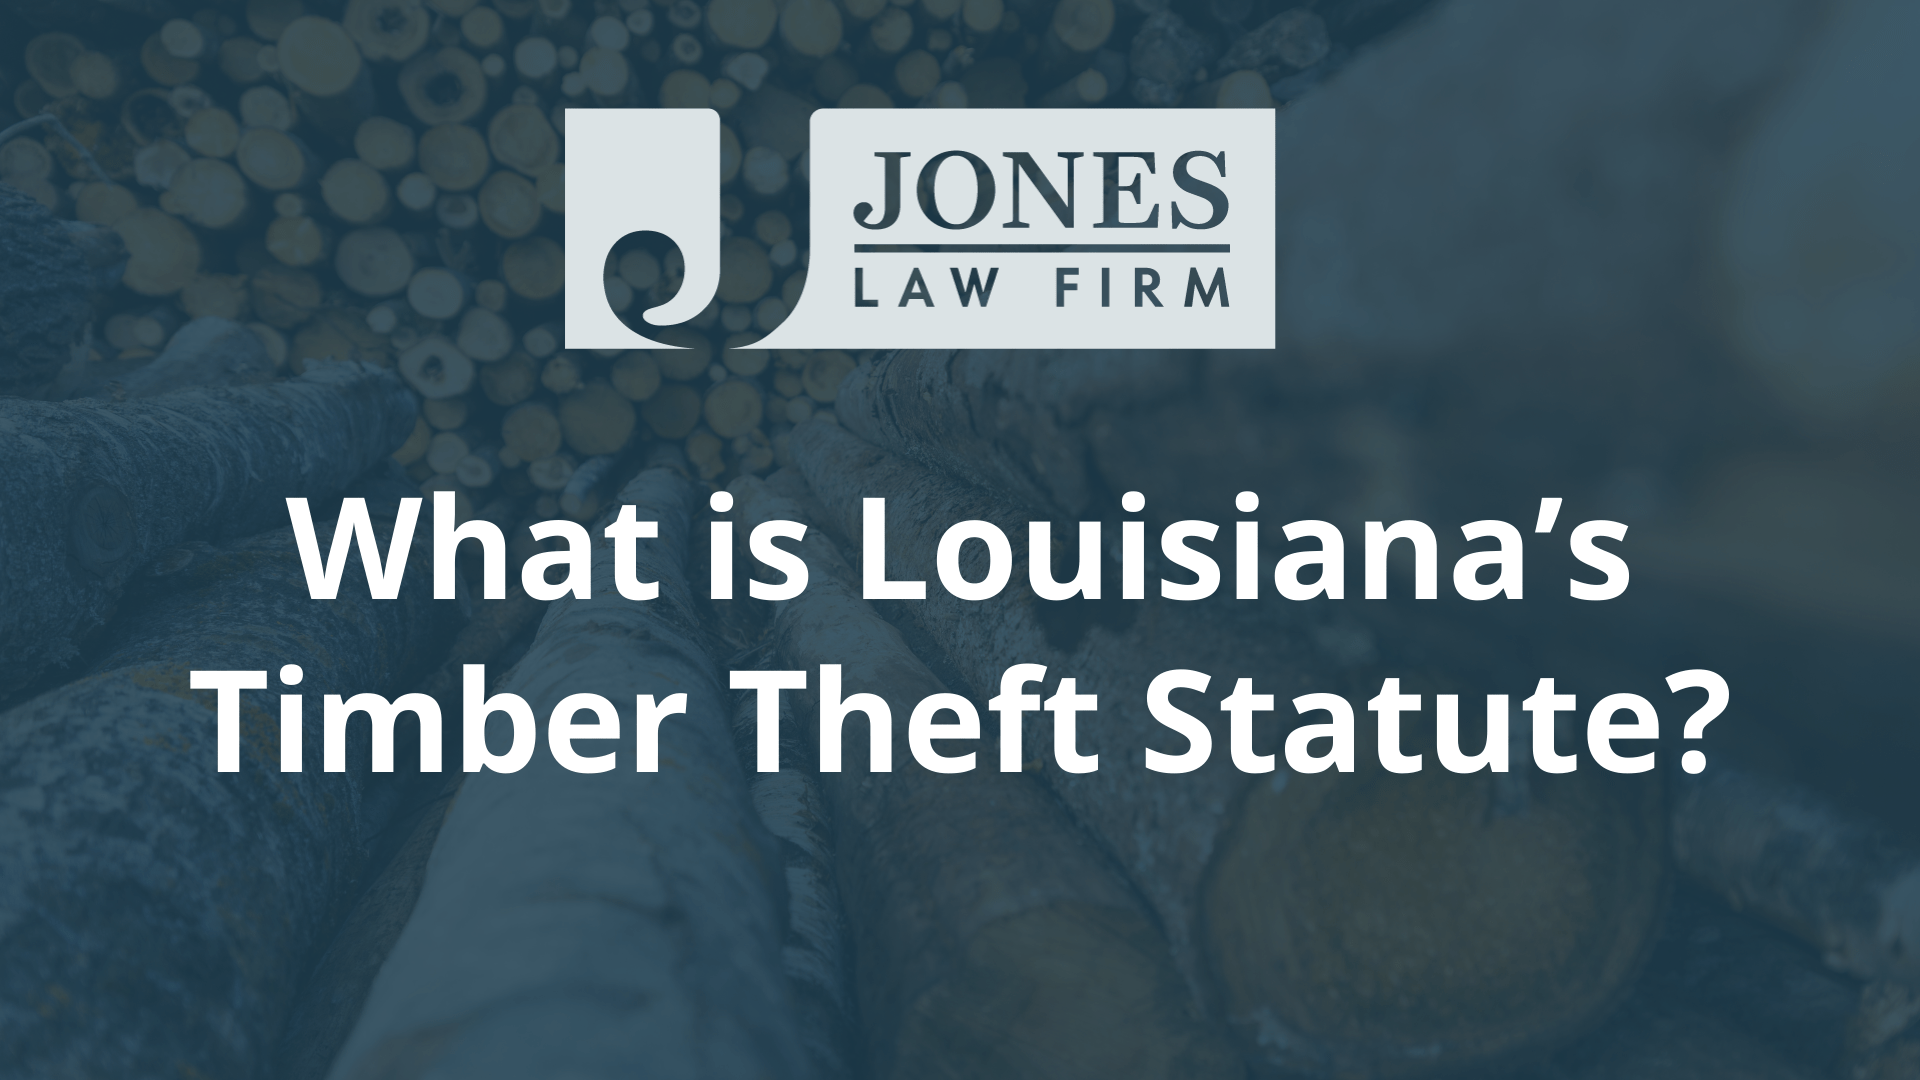 What is Louisiana’s Timber Theft Statute - jones law firm - louisiana